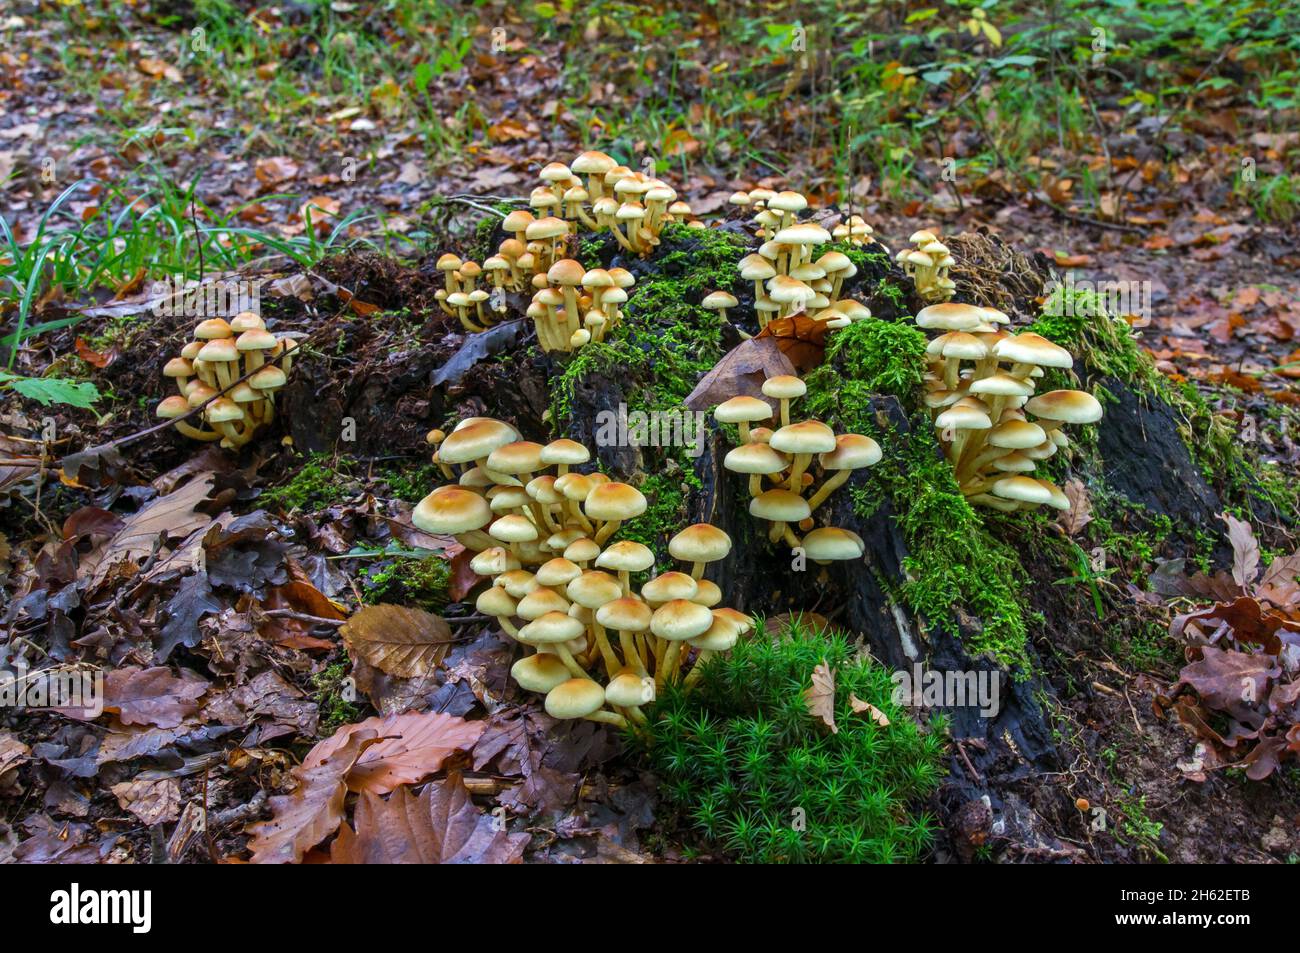 the green-leaved sulfur head is a leaf mushroom from the genus sulfur heads. Stock Photo